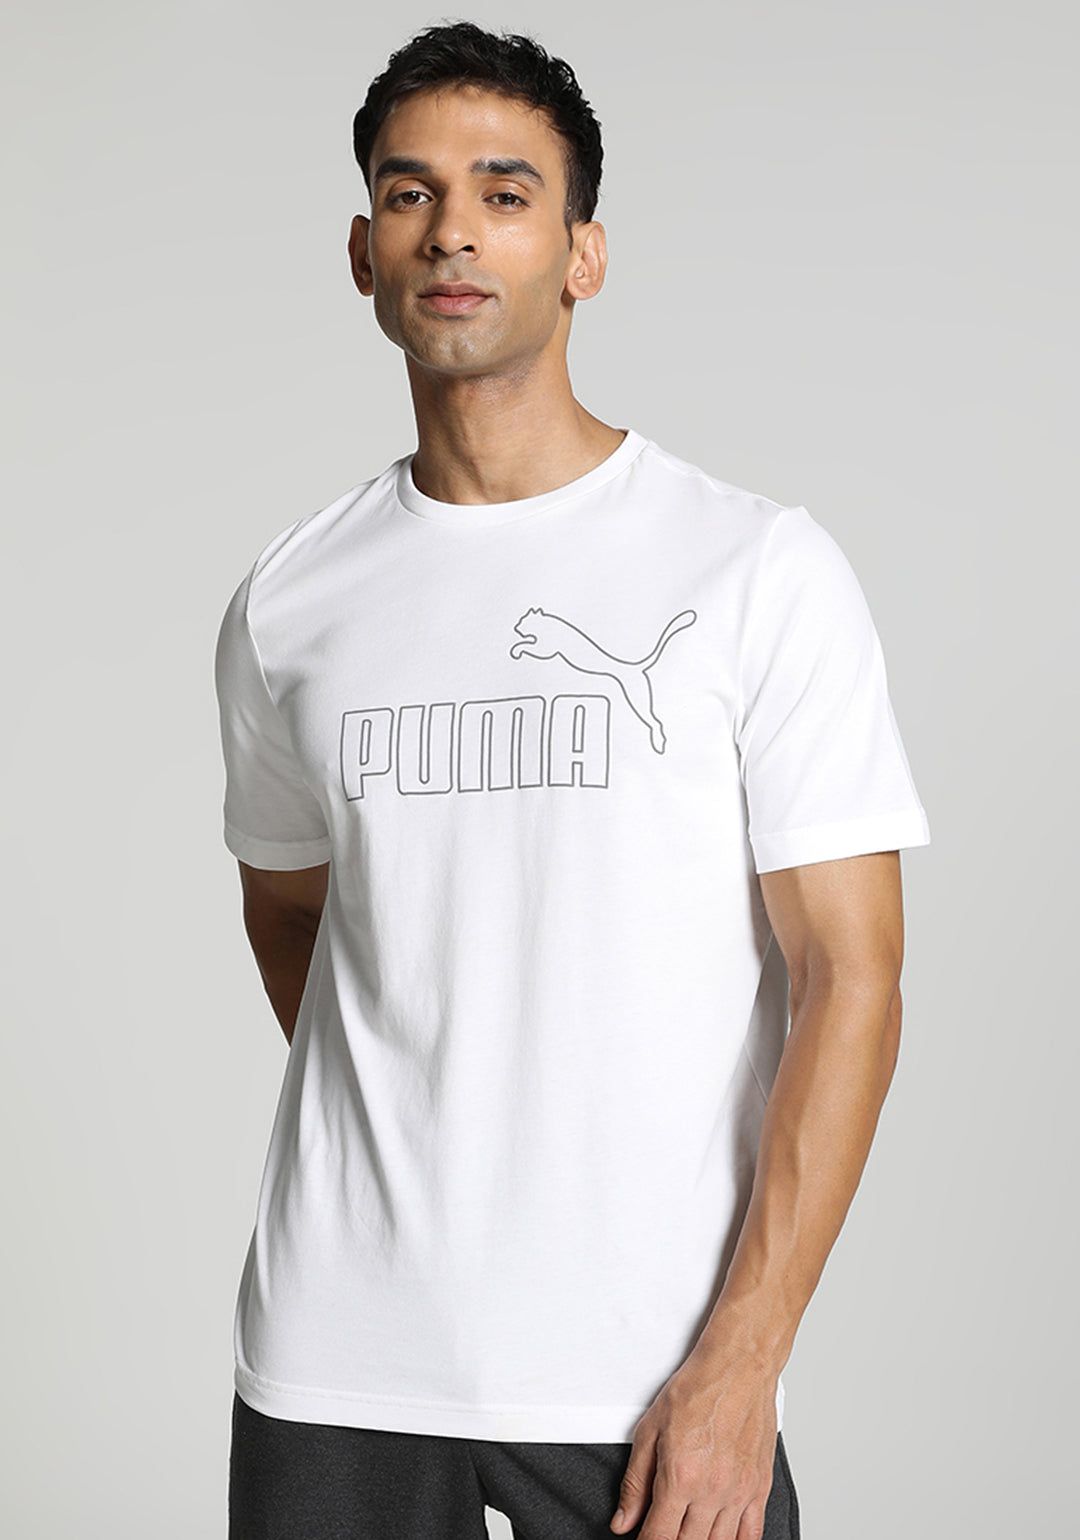 Jerseys T T-Shirts shop | Buy Official & T-Shirts Shirts Merchandise: Online